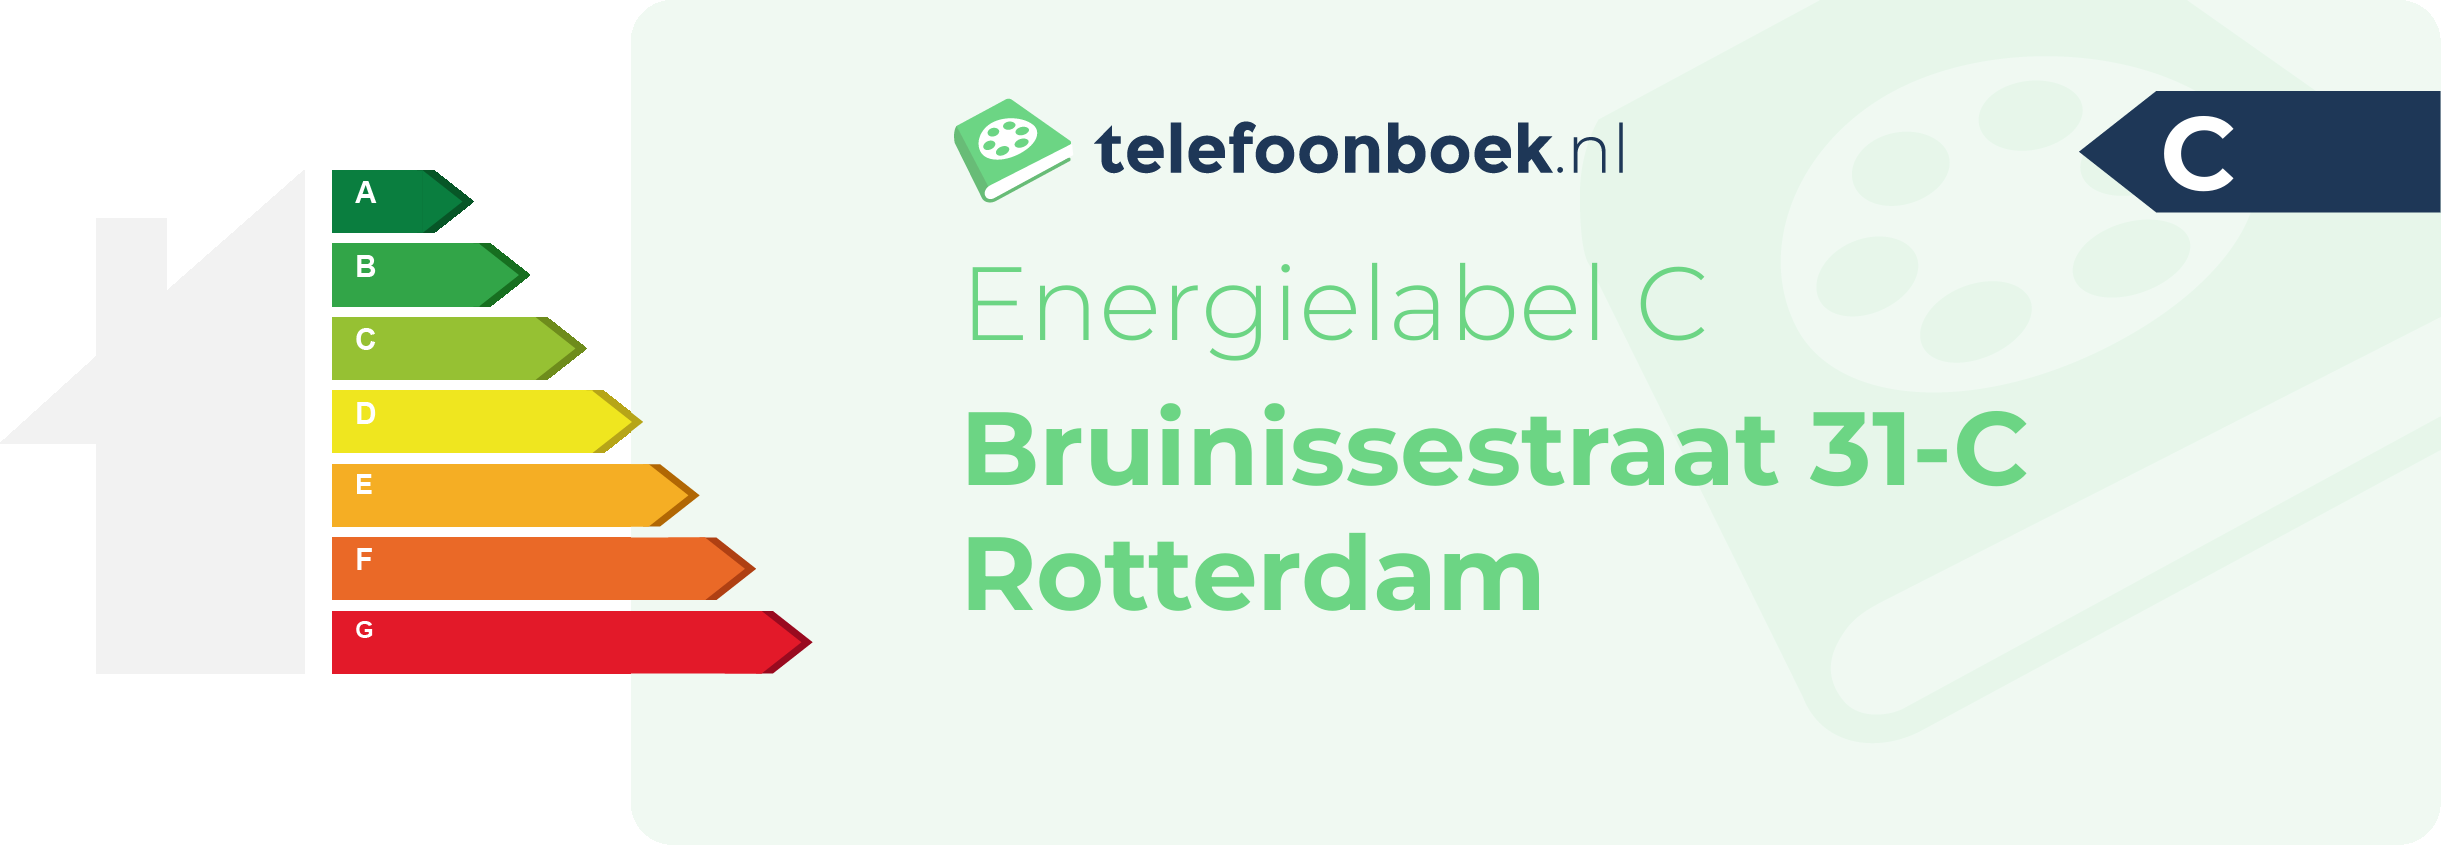 Energielabel Bruinissestraat 31-C Rotterdam